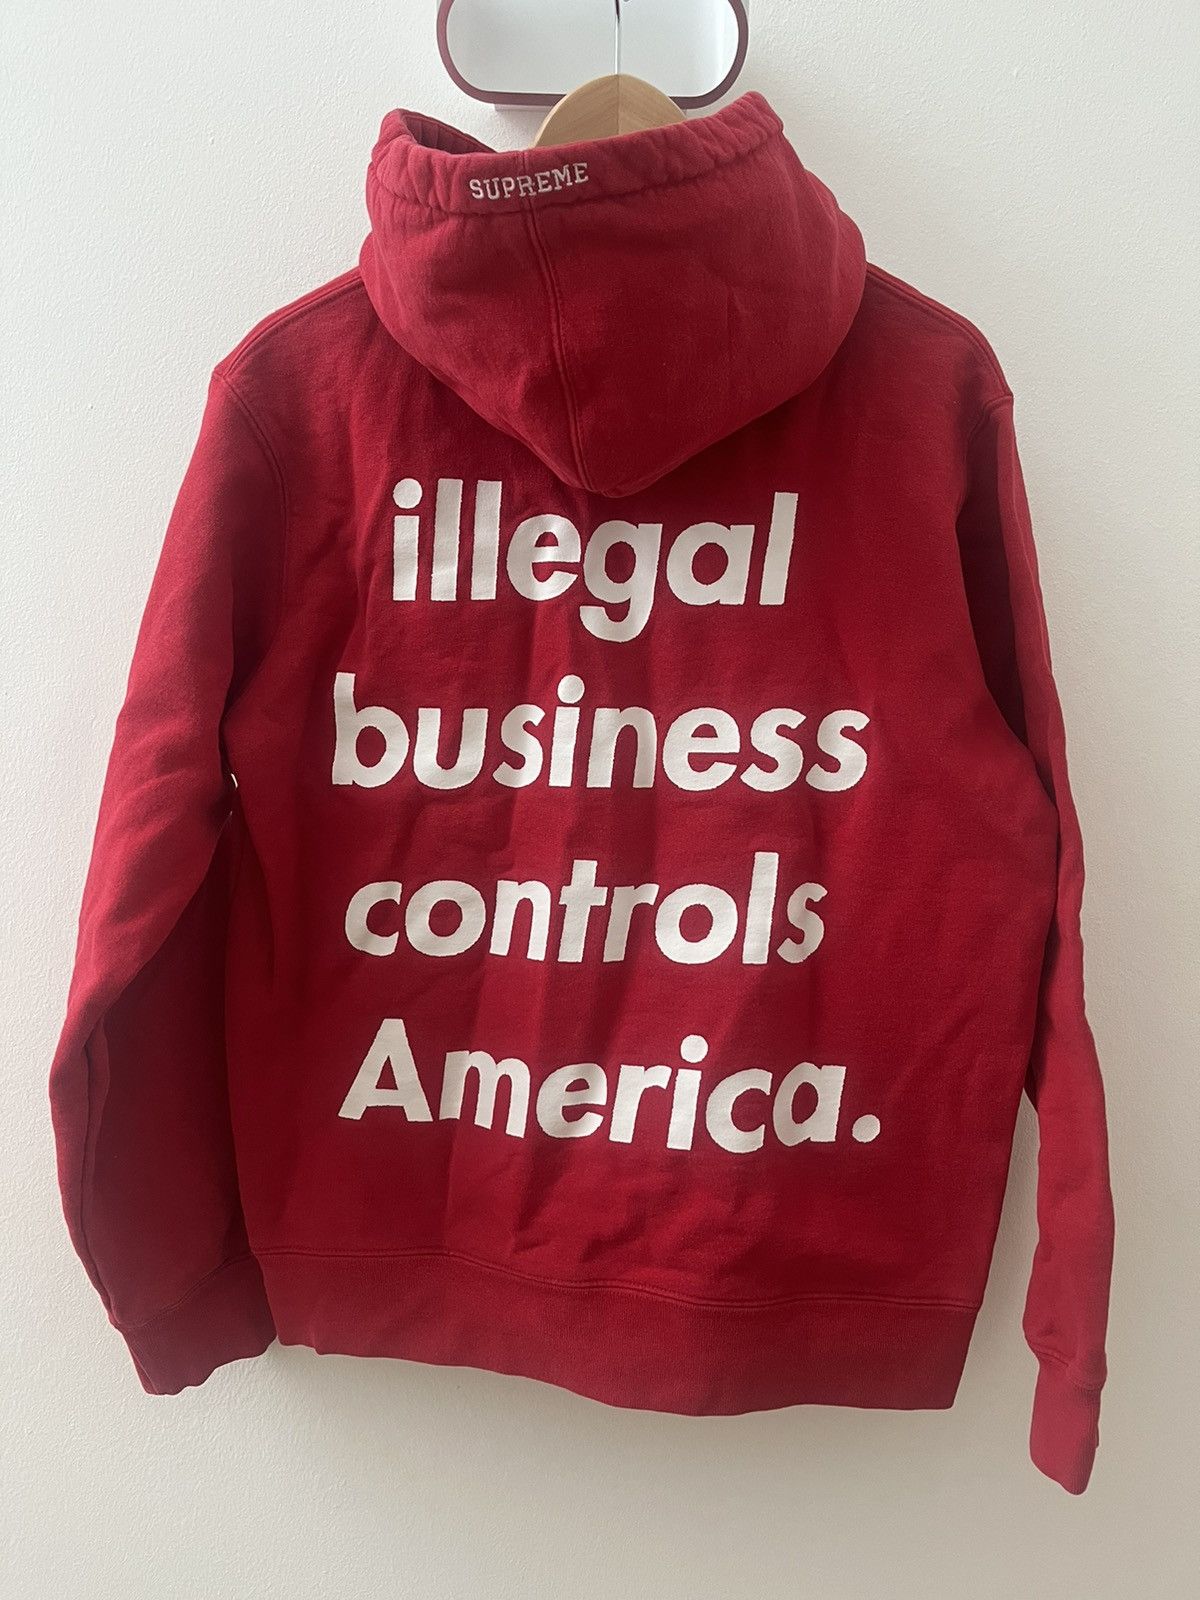 Supreme Supreme Illegal Business Controls America Hoodie